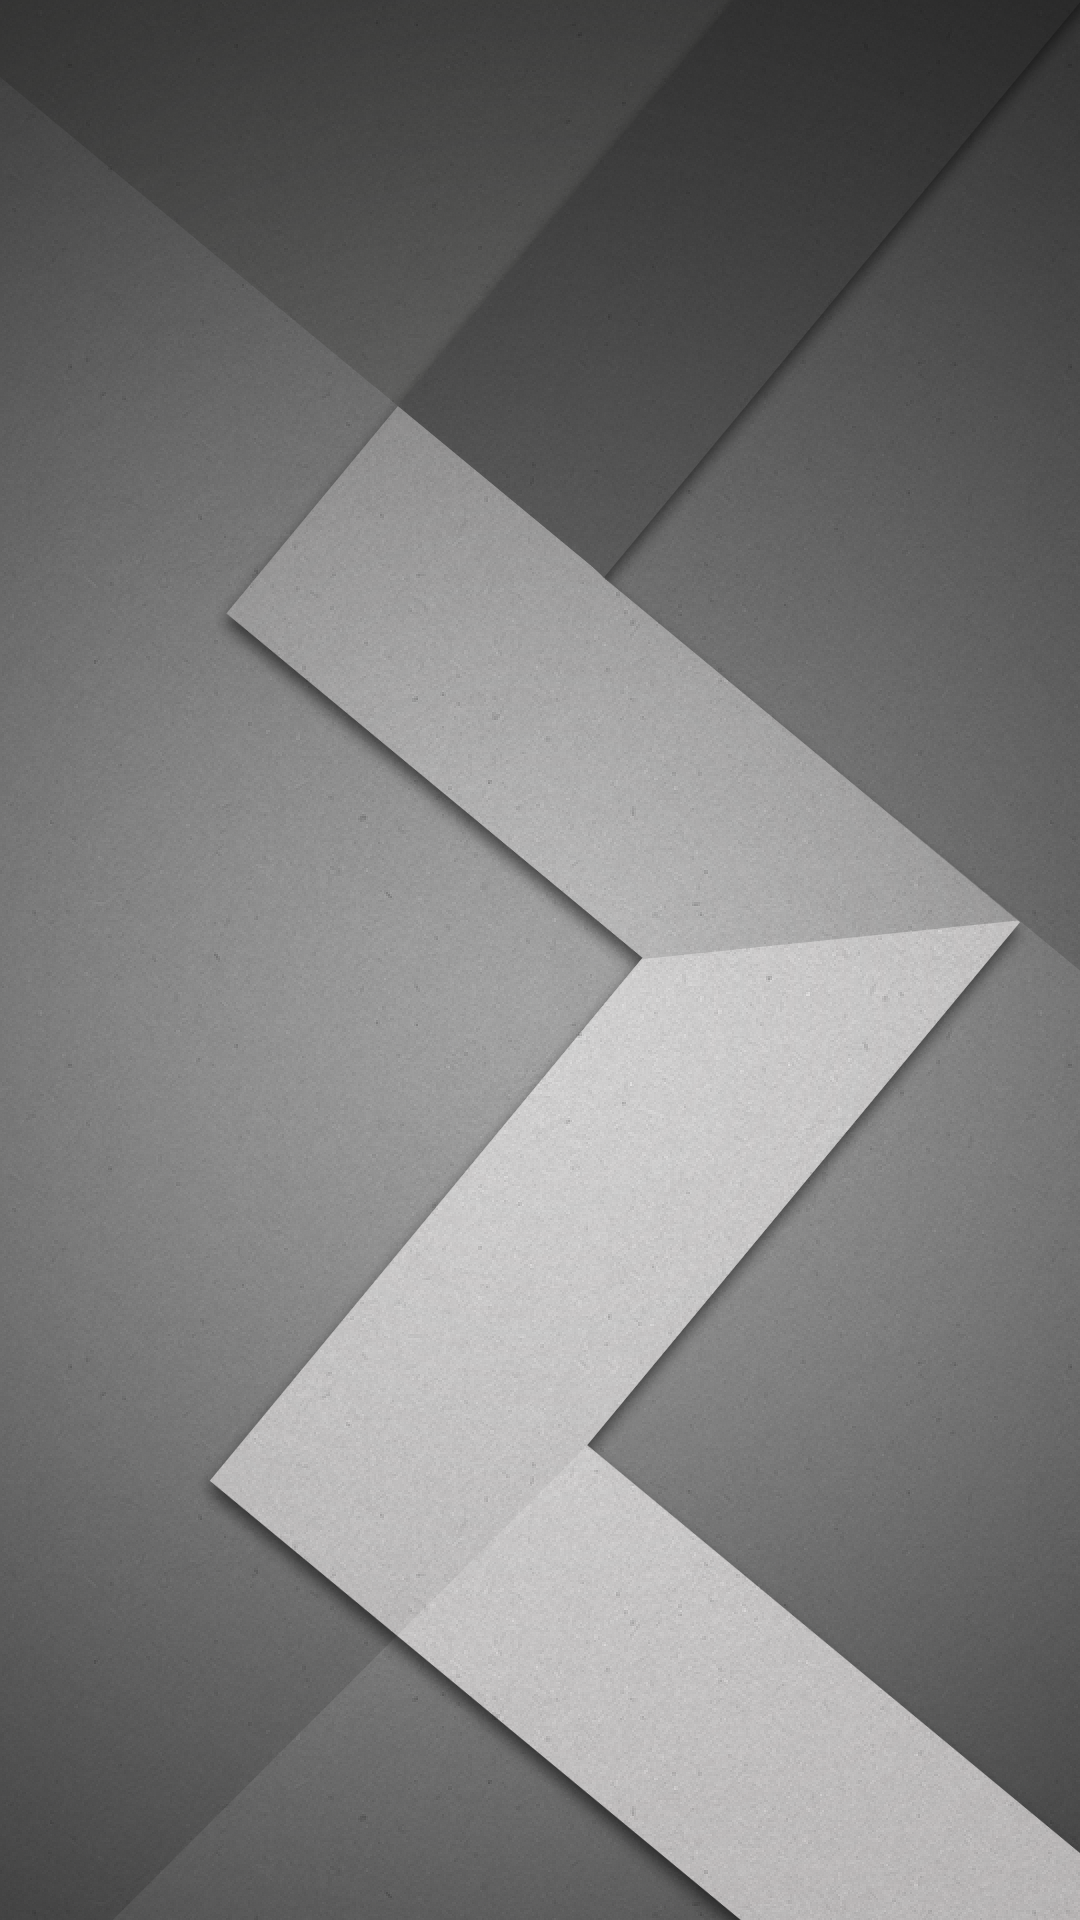 android marshmallow wallpaper 1080p,linea,font,architettura,triangolo